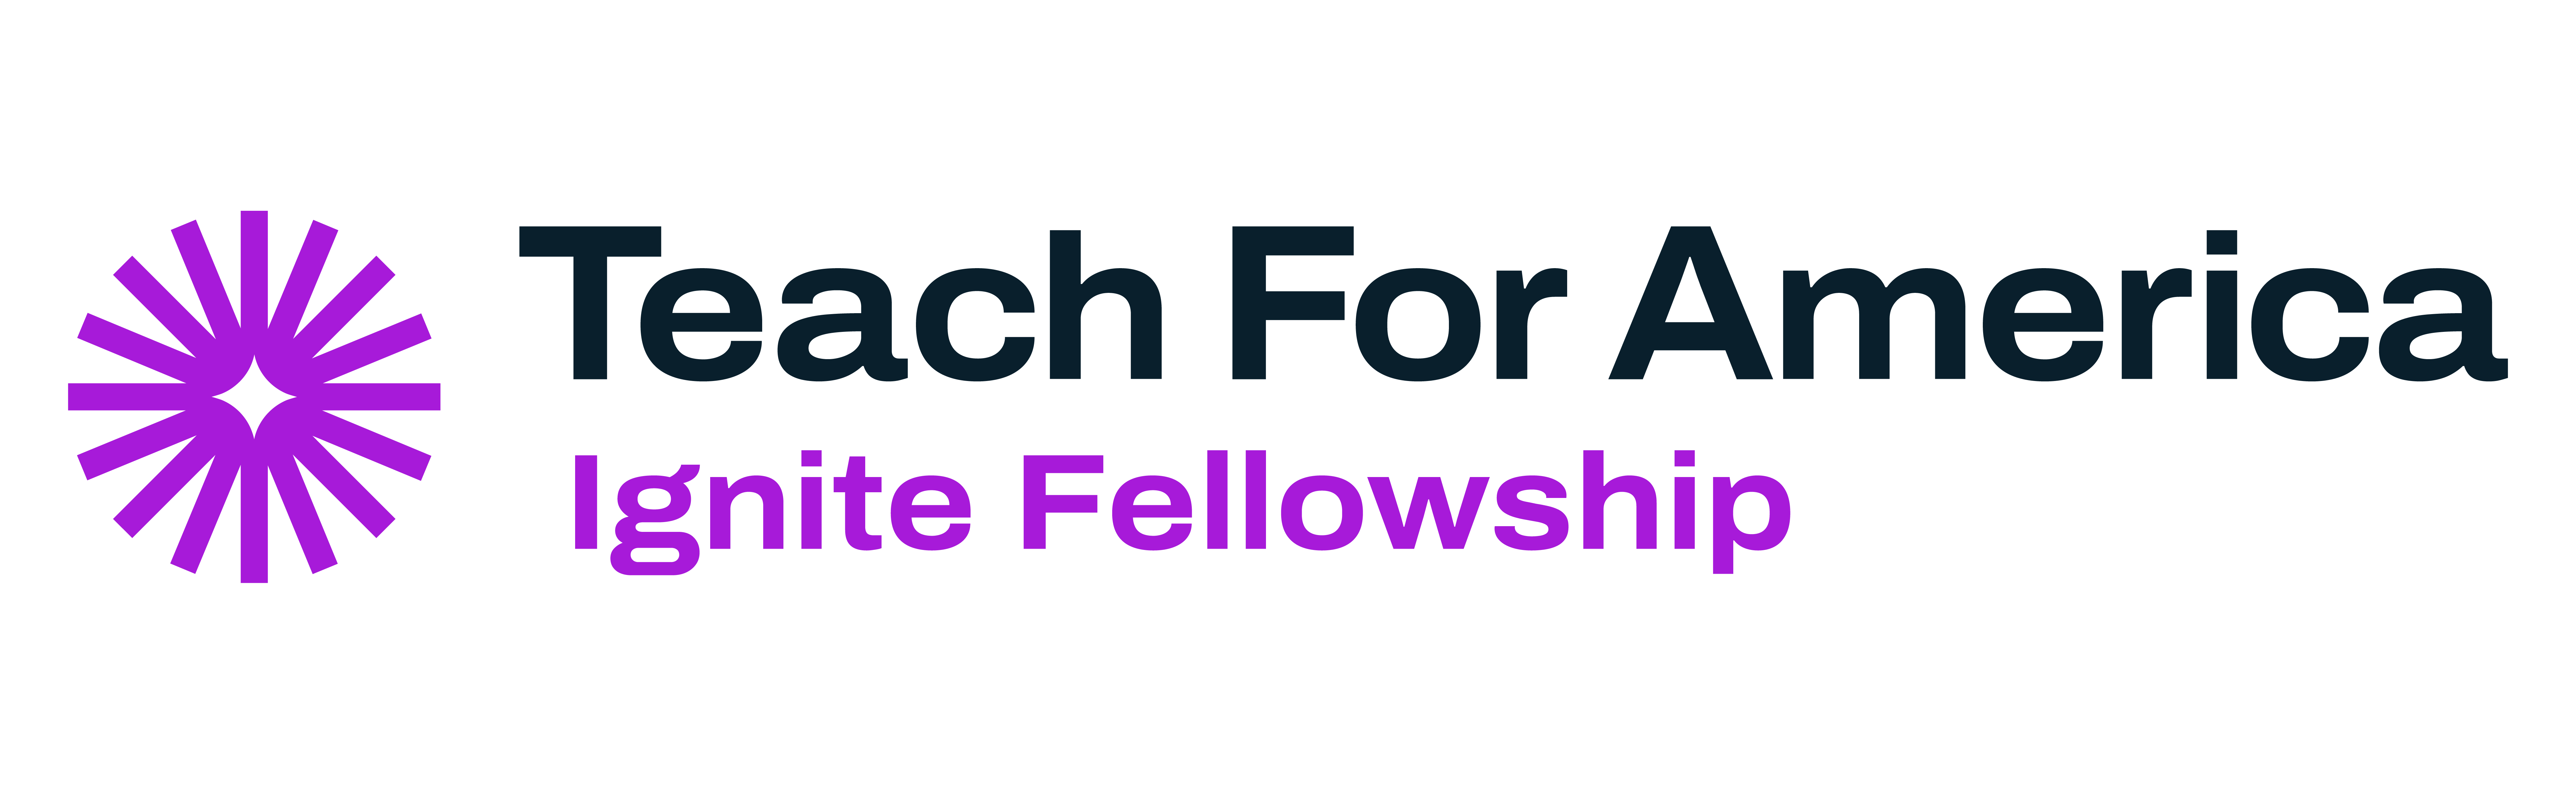 Teach For America’s Ignite Fellowship